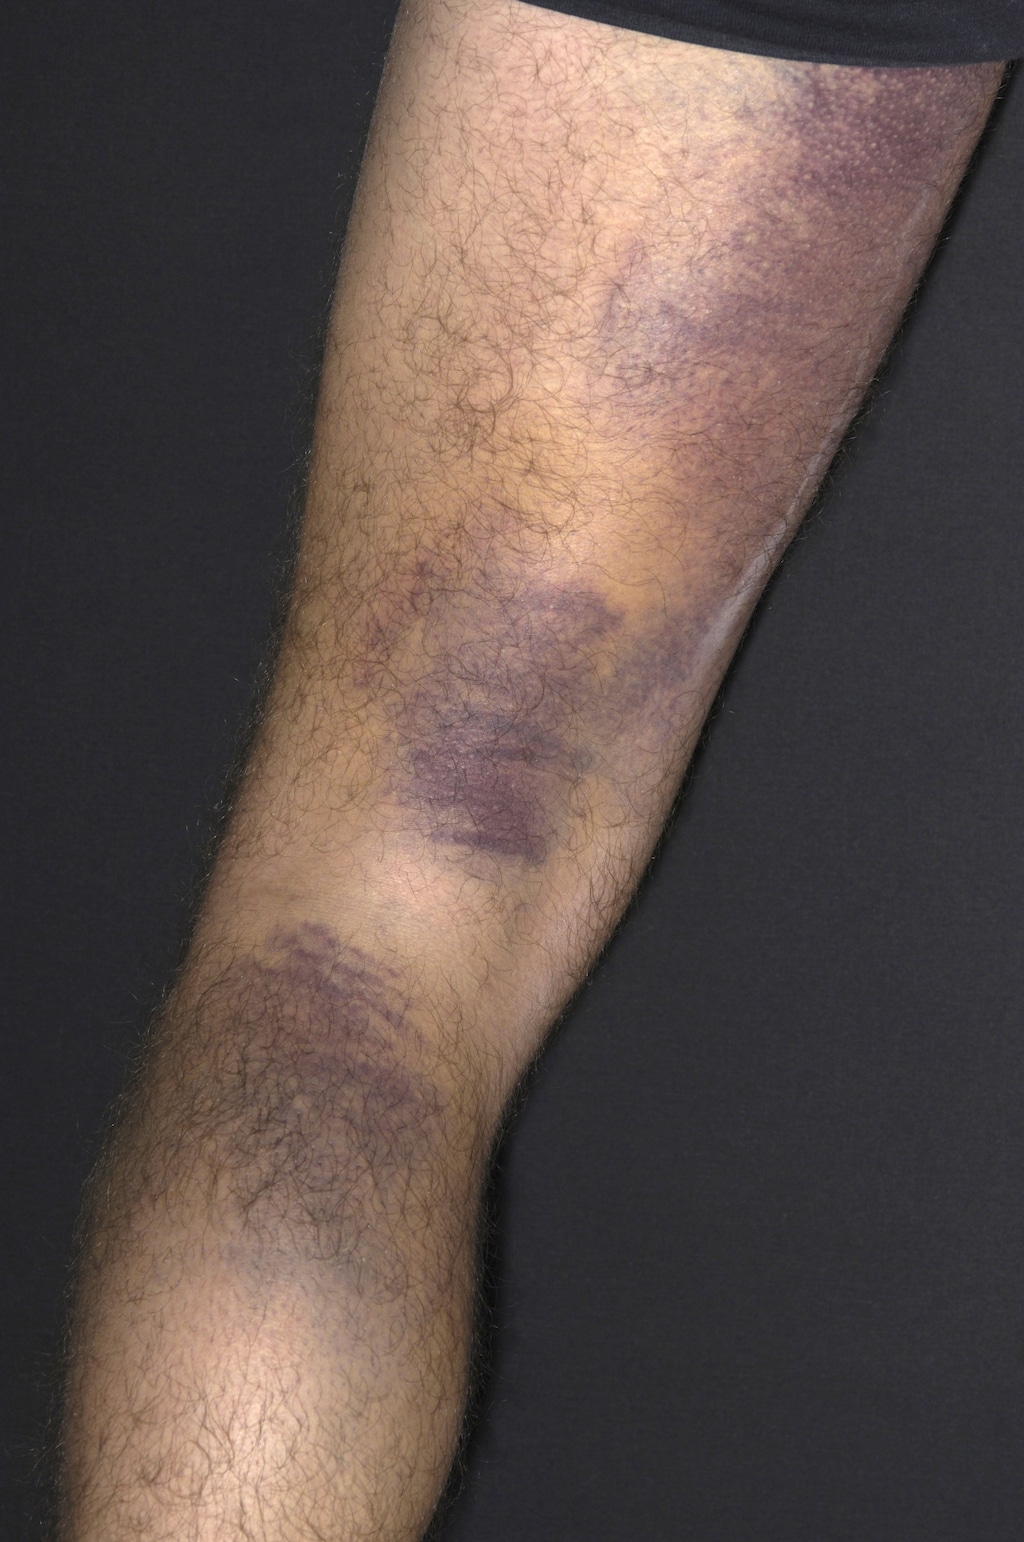 Ecchymoses (Bruises)